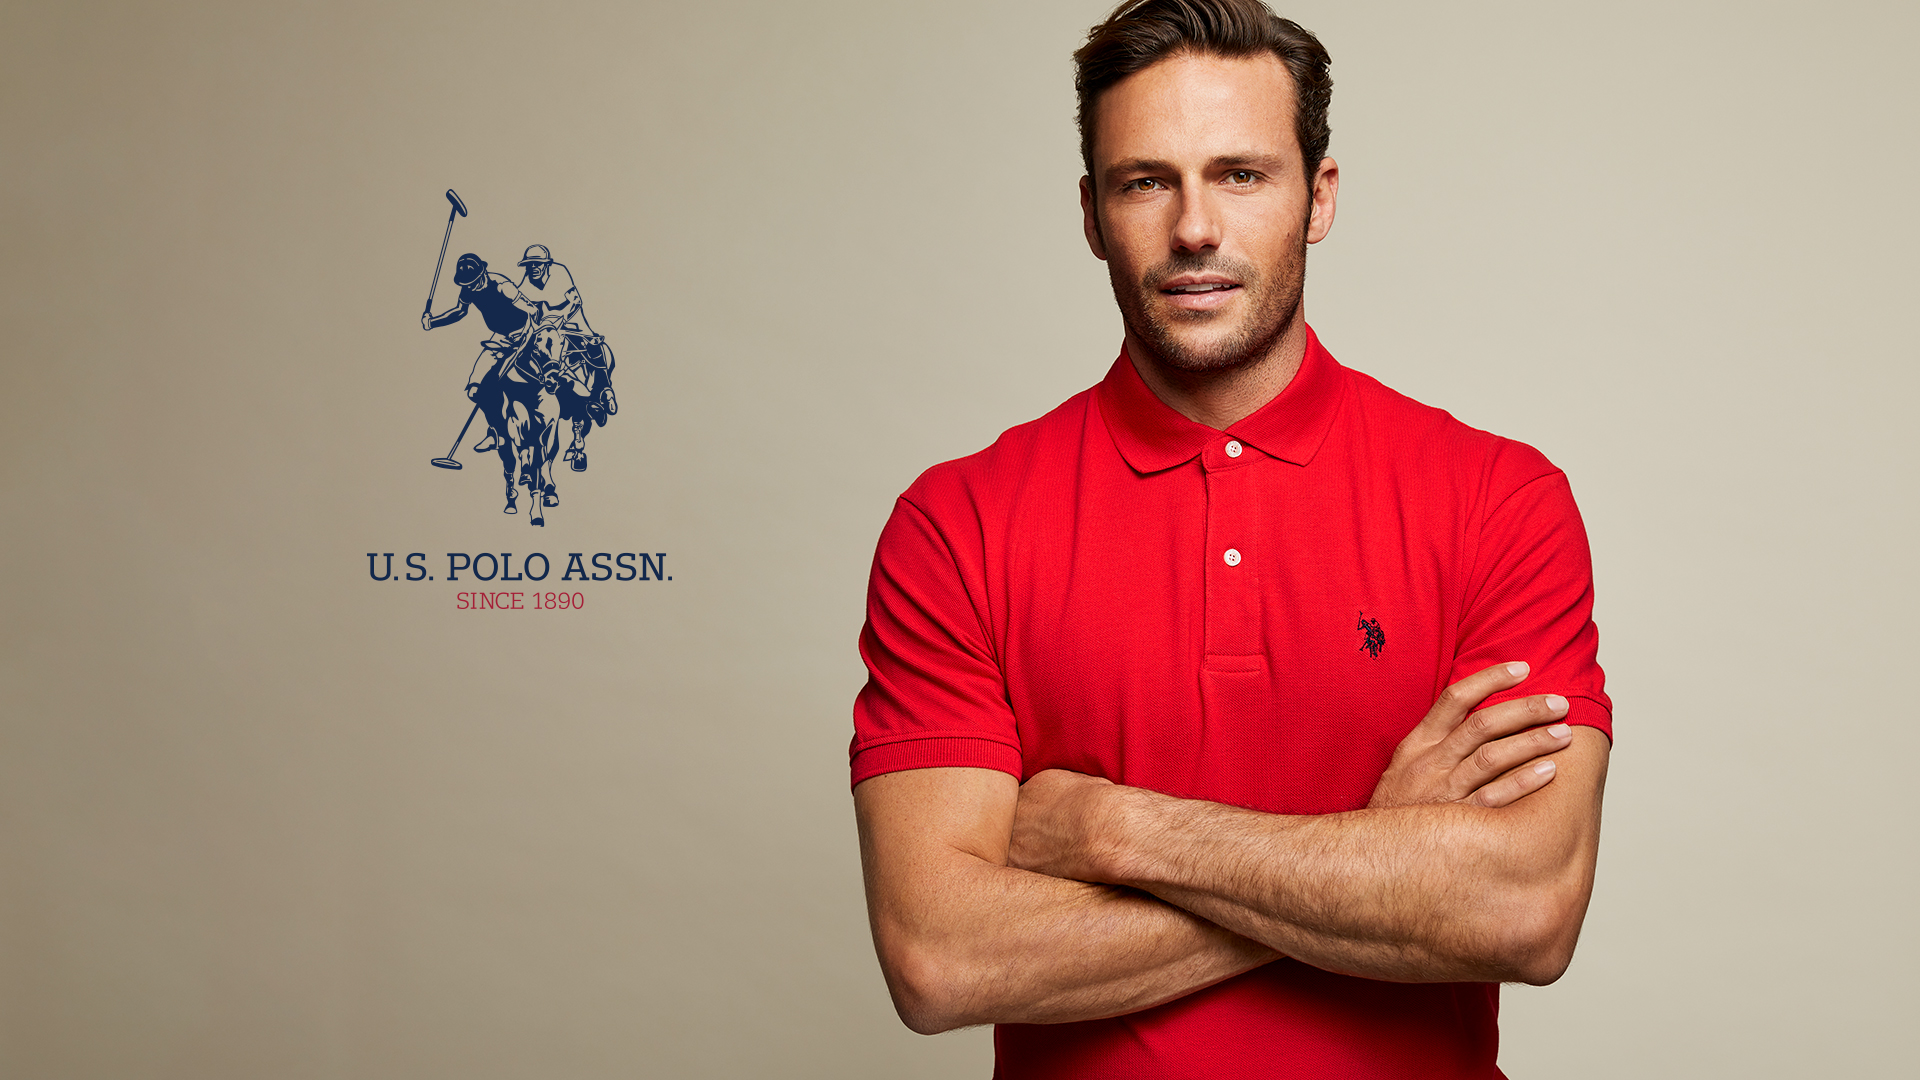 U.S. Polo Assn., Intimates & Sleepwear